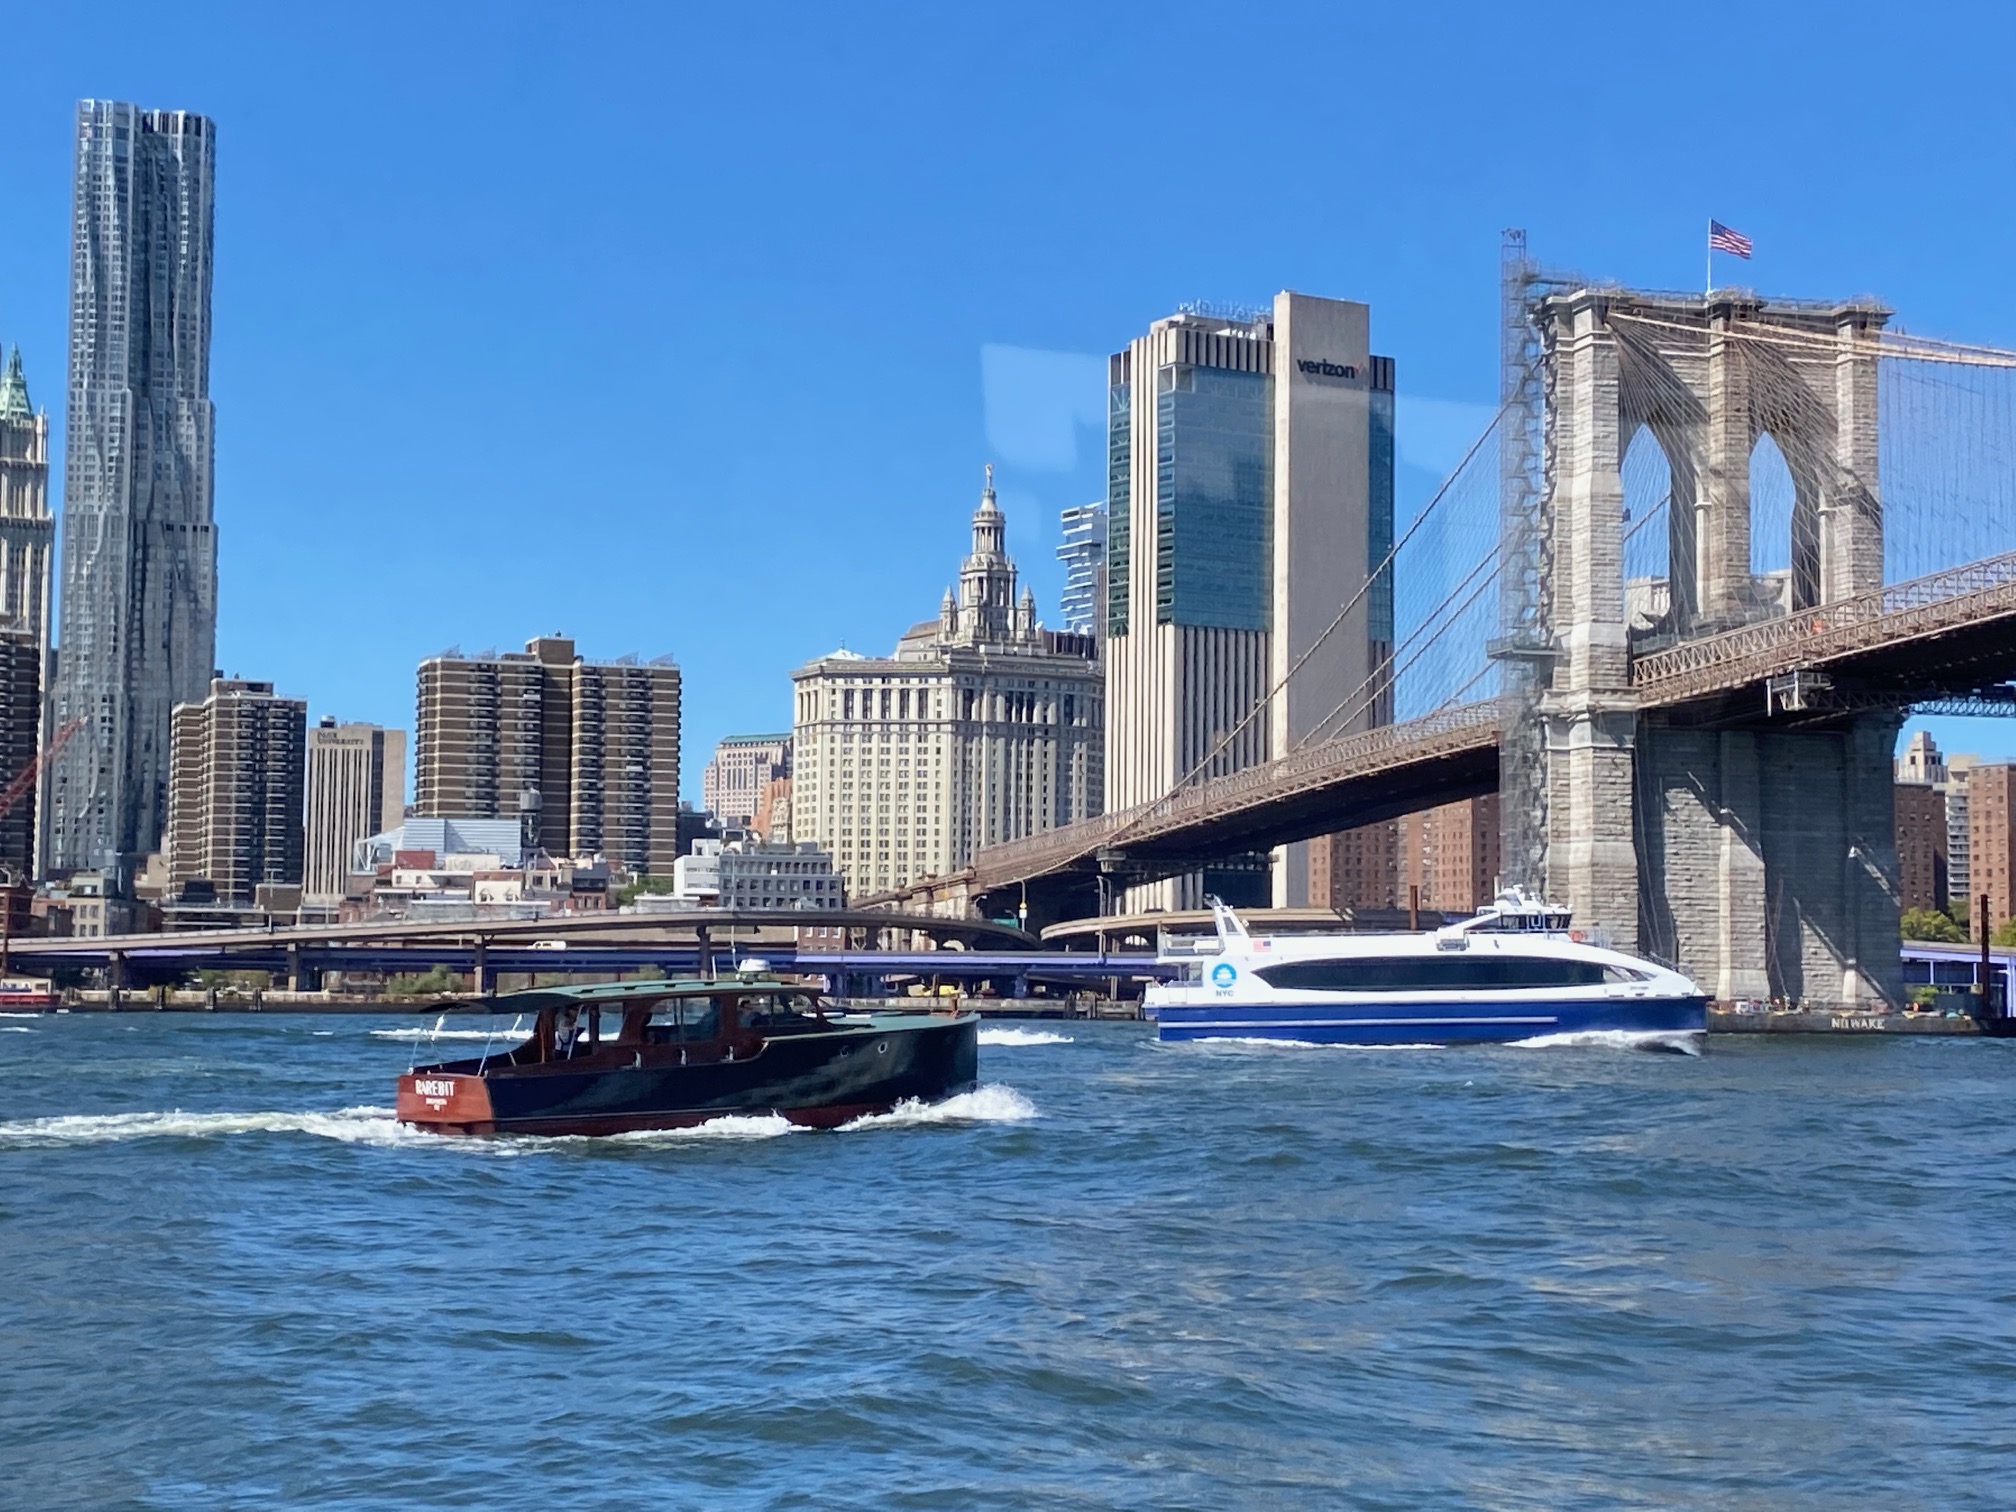 Matthew Rhys' boat, inspired by Hemingway's Pilar, can be seen cruising through the waters surrounding NYC.